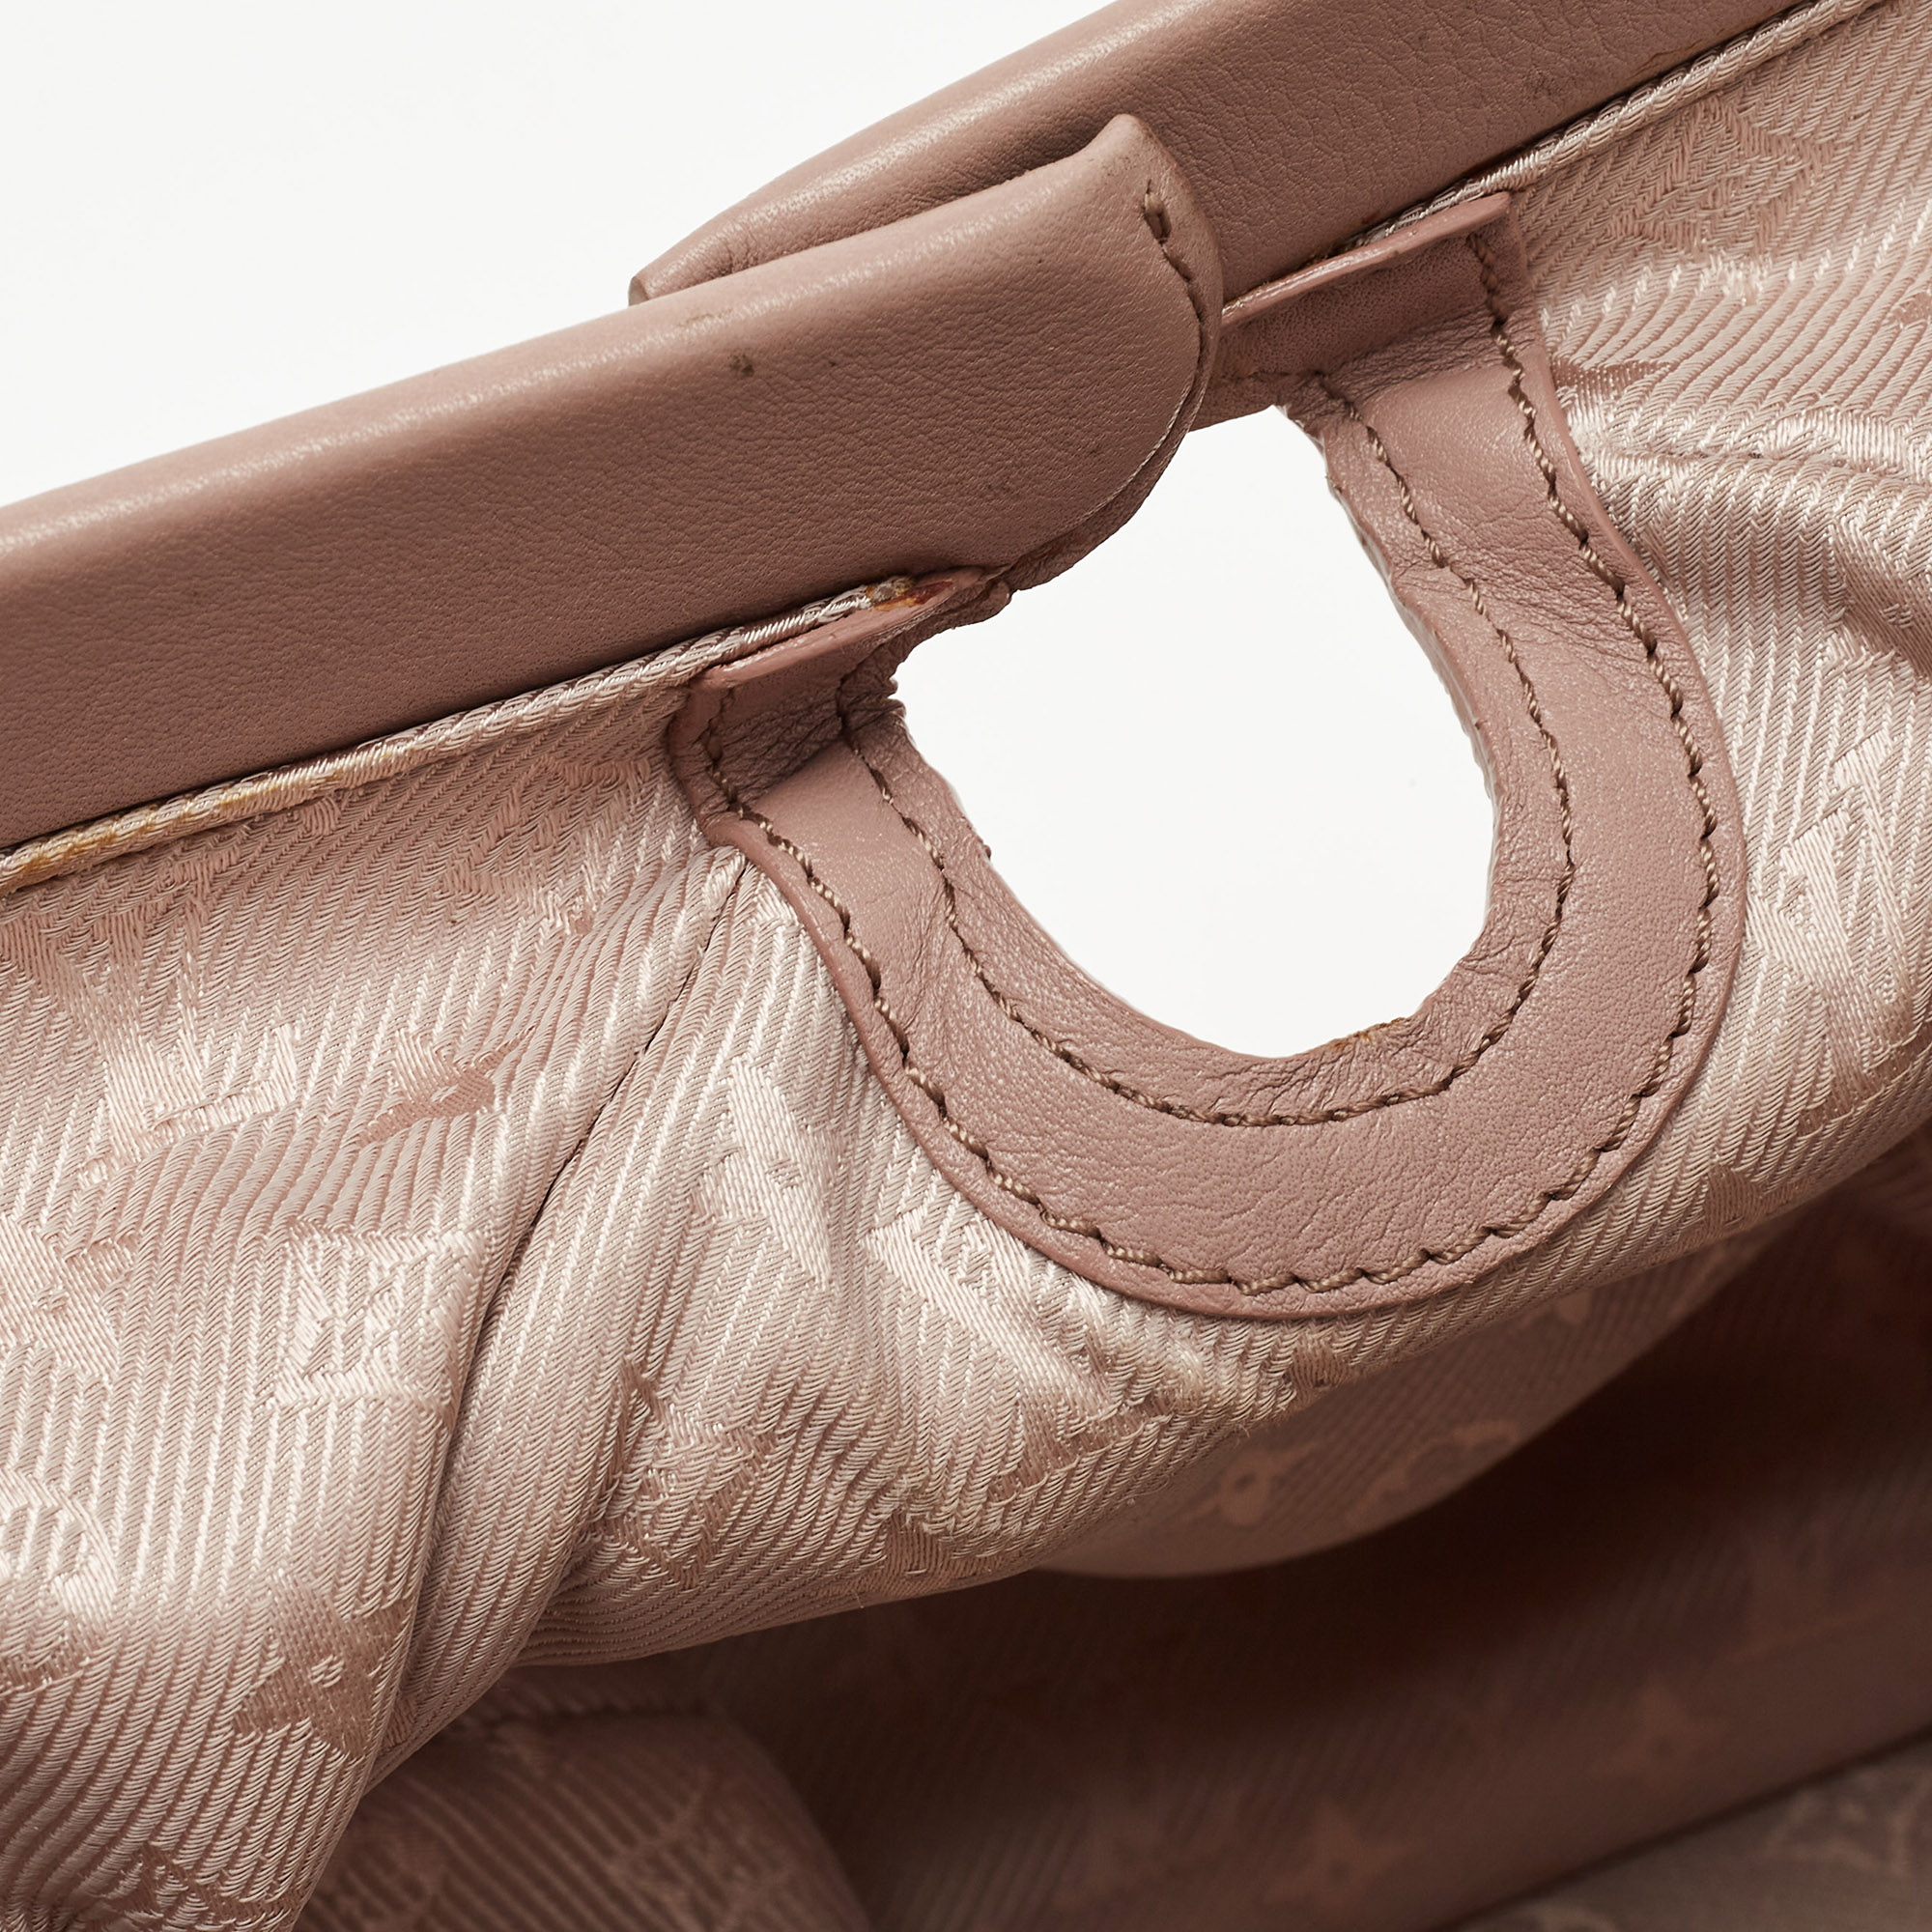 Louis Vuitton Rose Cuir Leather Cinema Intrigue Bag